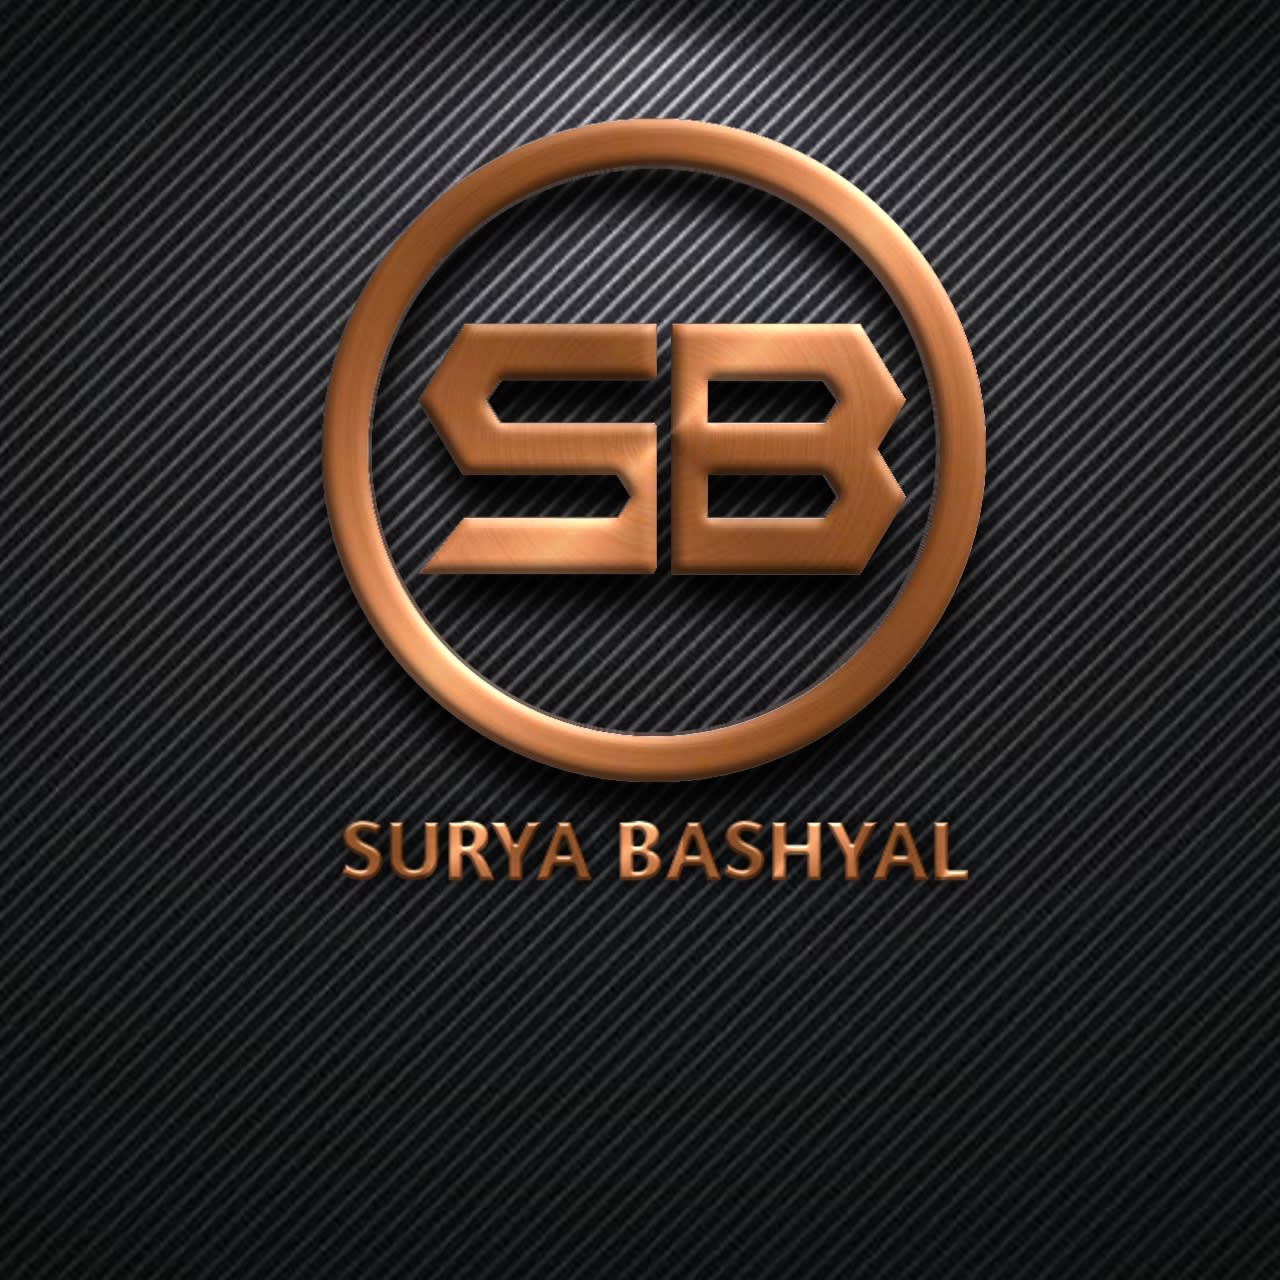 Surya Bashyal